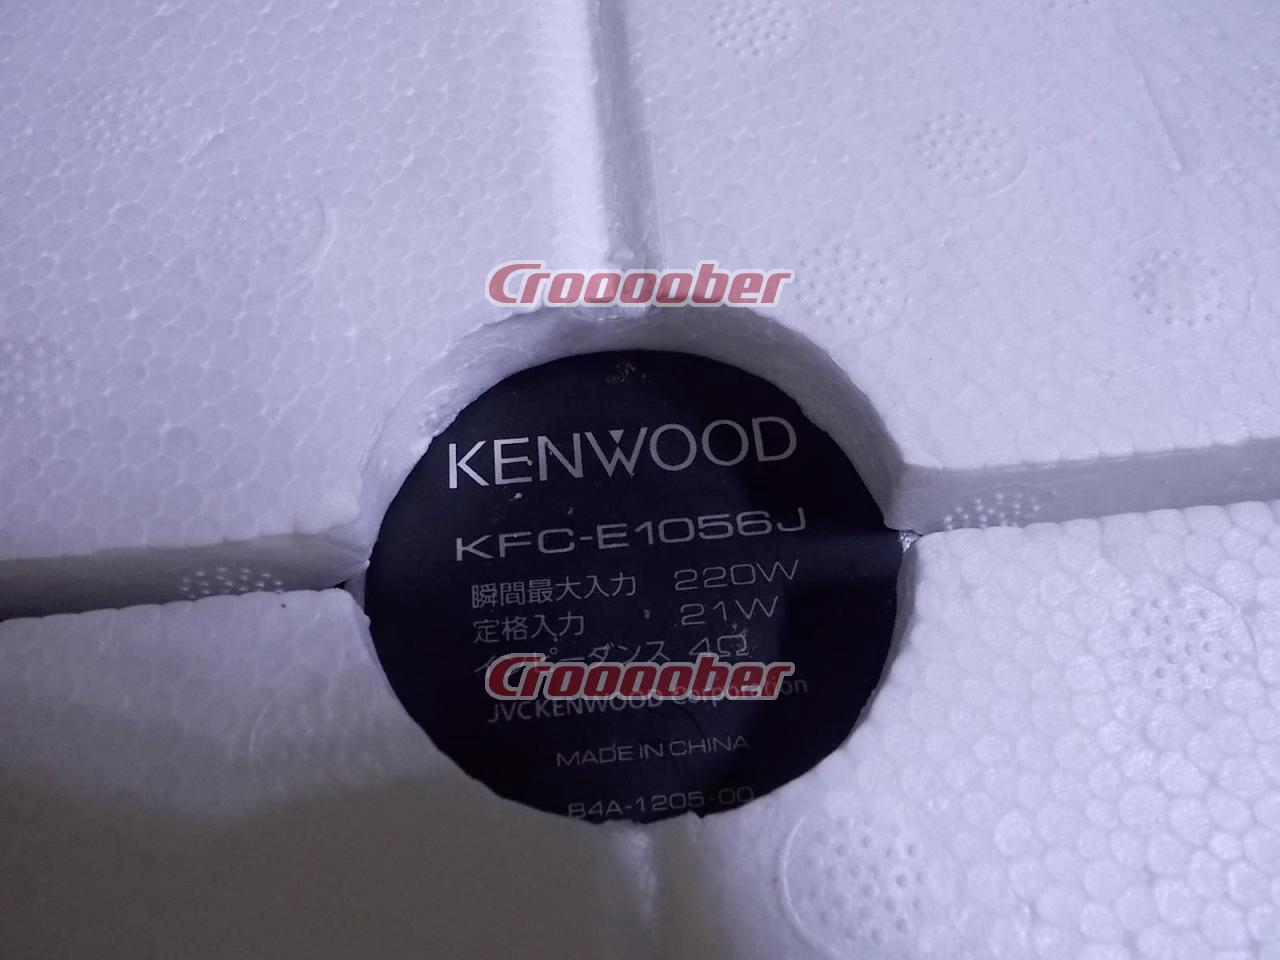 KENWOOD(ケンウッド) KFC-E1056J | スピーカー 埋め込みスピーカーパーツの通販なら | Croooober(クルーバー)